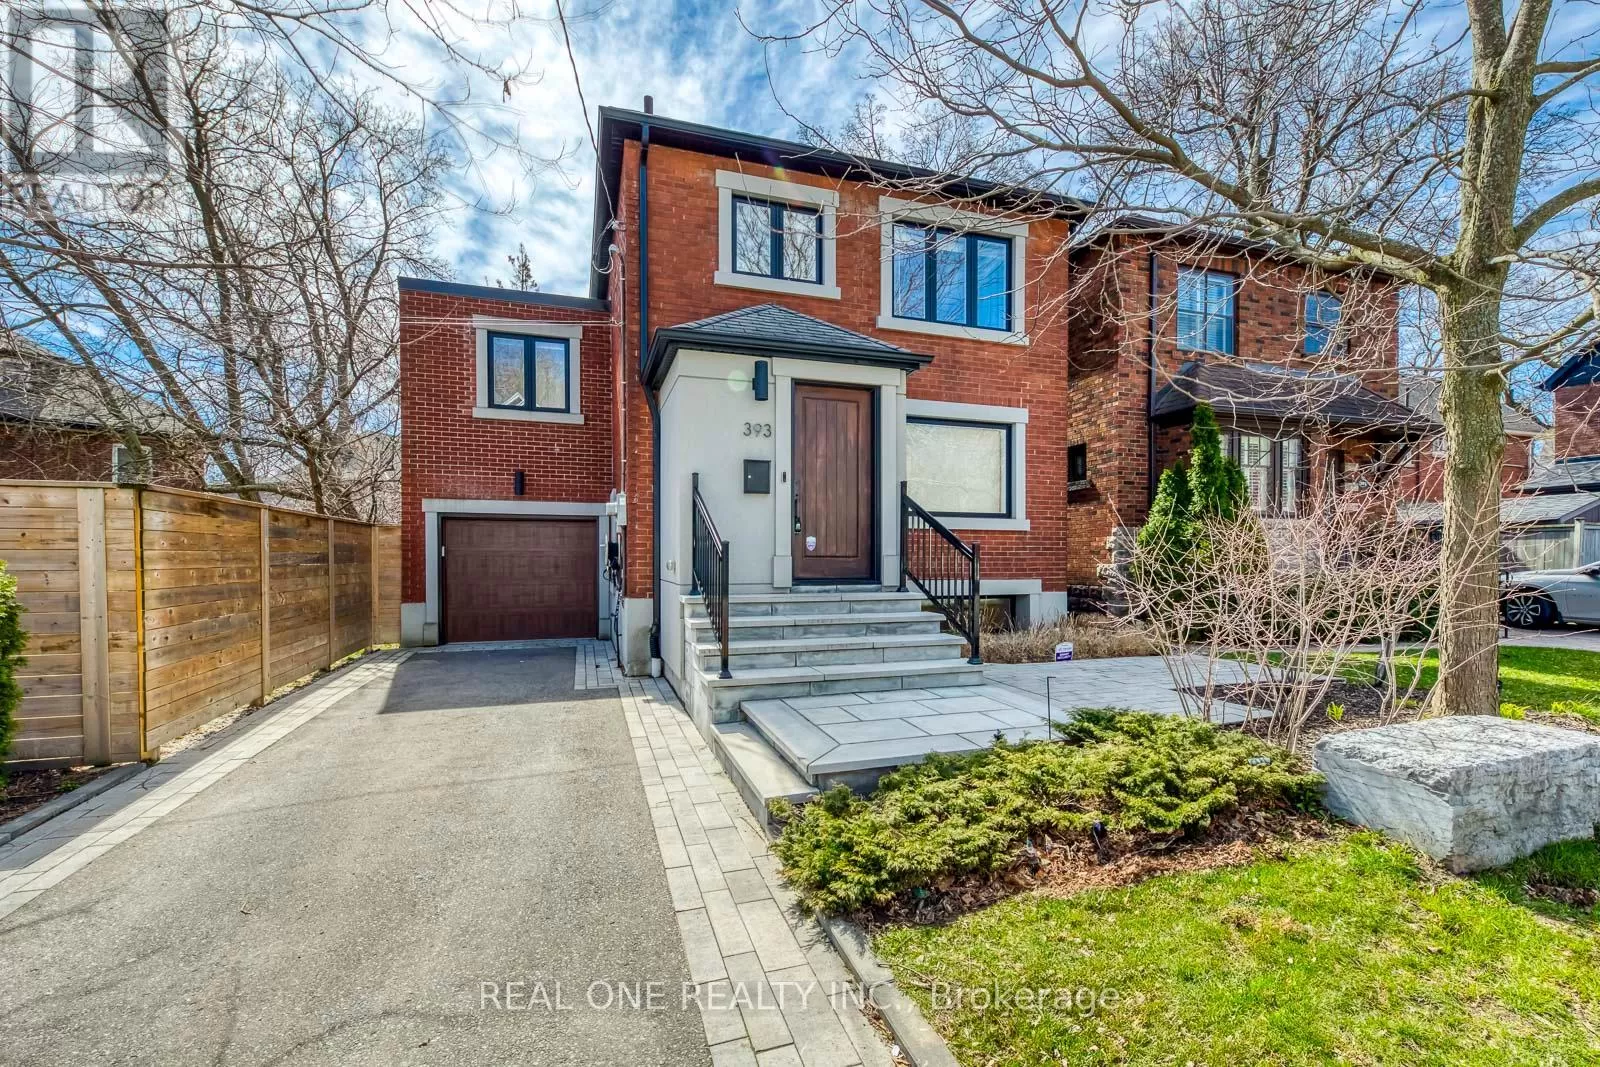 House for rent: 393 Summerhill Avenue, Toronto, Ontario M4W 2E3